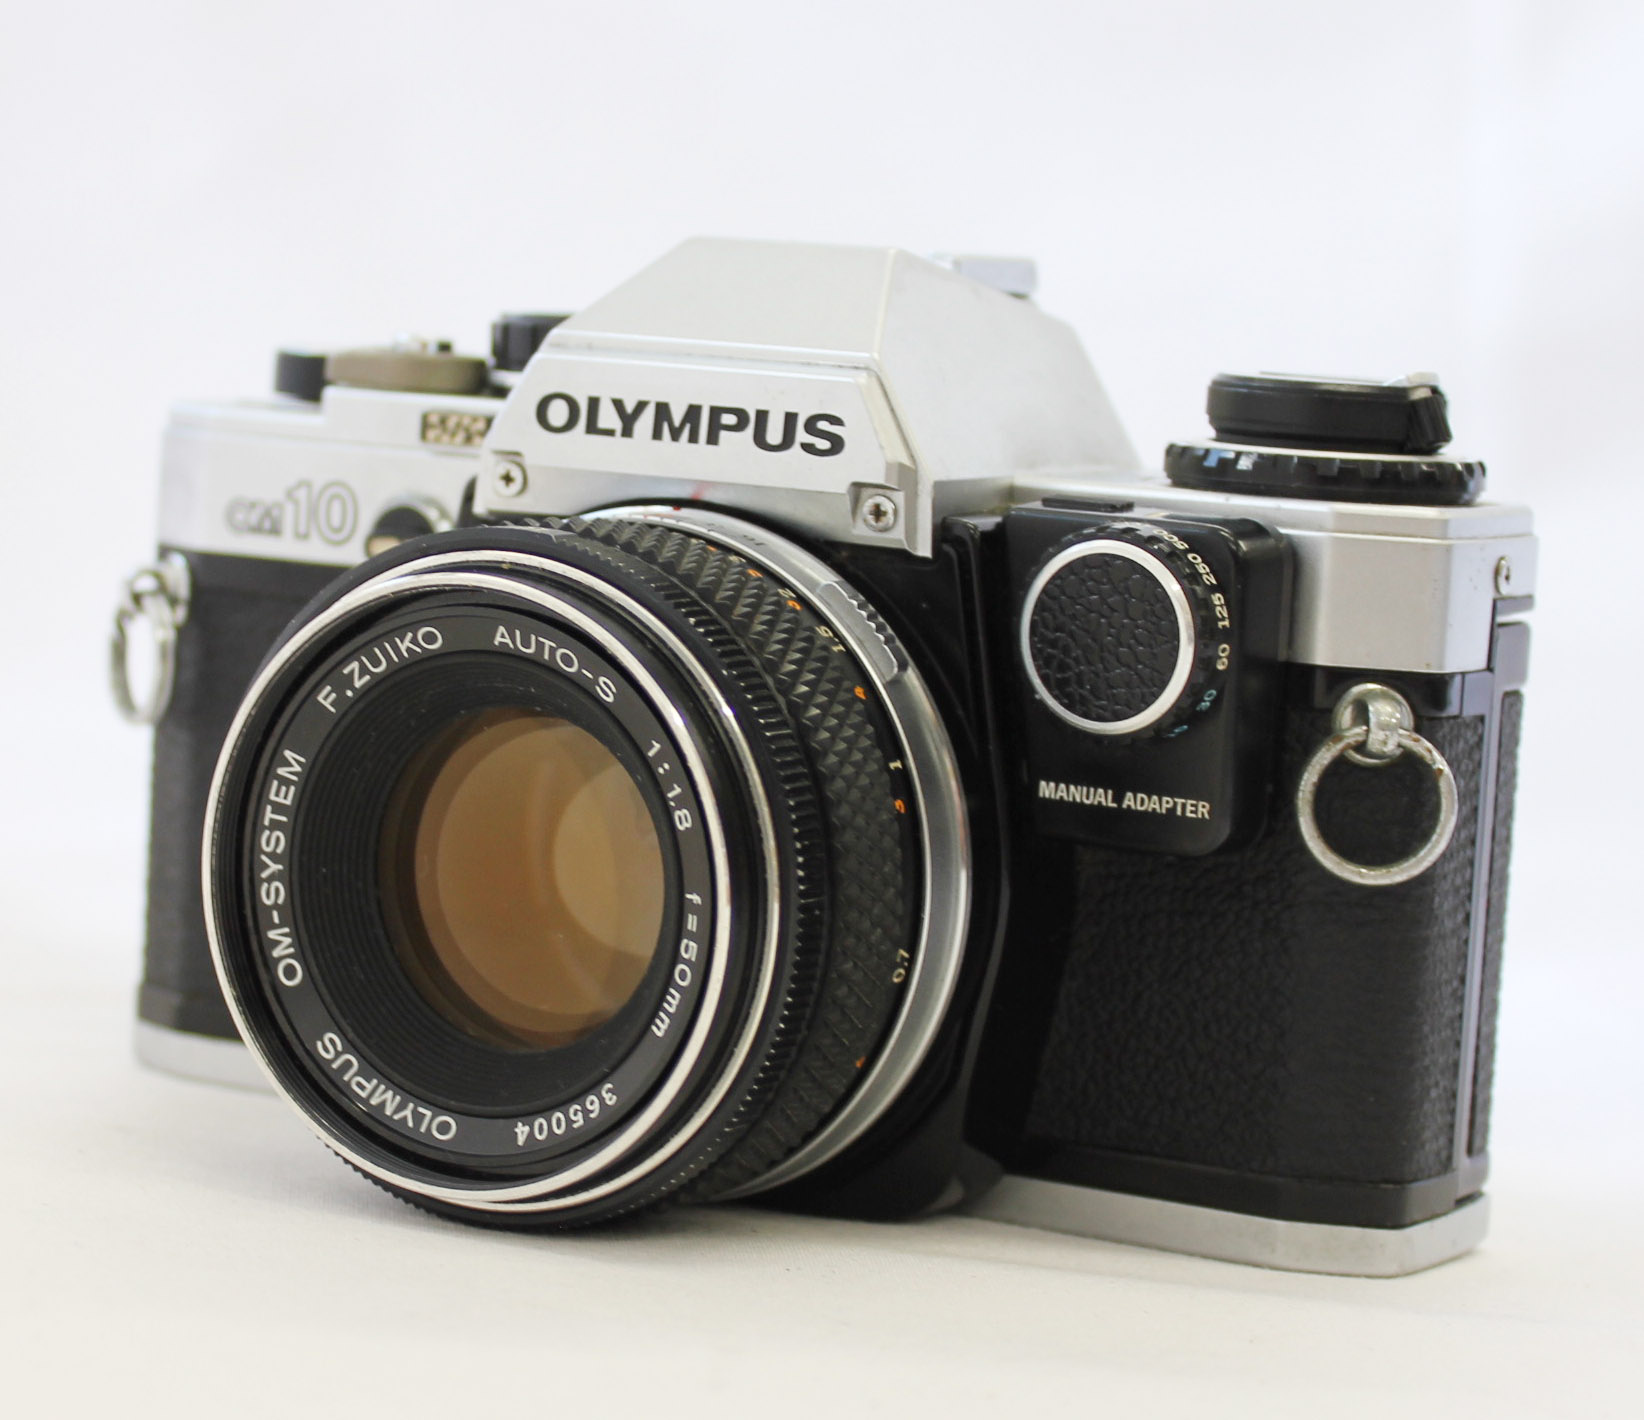 Japan Used Camera Shop | Olympus OM-10 35mm SLR Filmcamera with Manual Adapter and F.Zuiko Auto-S 50mm F1.8 Bonus Lens from Japan